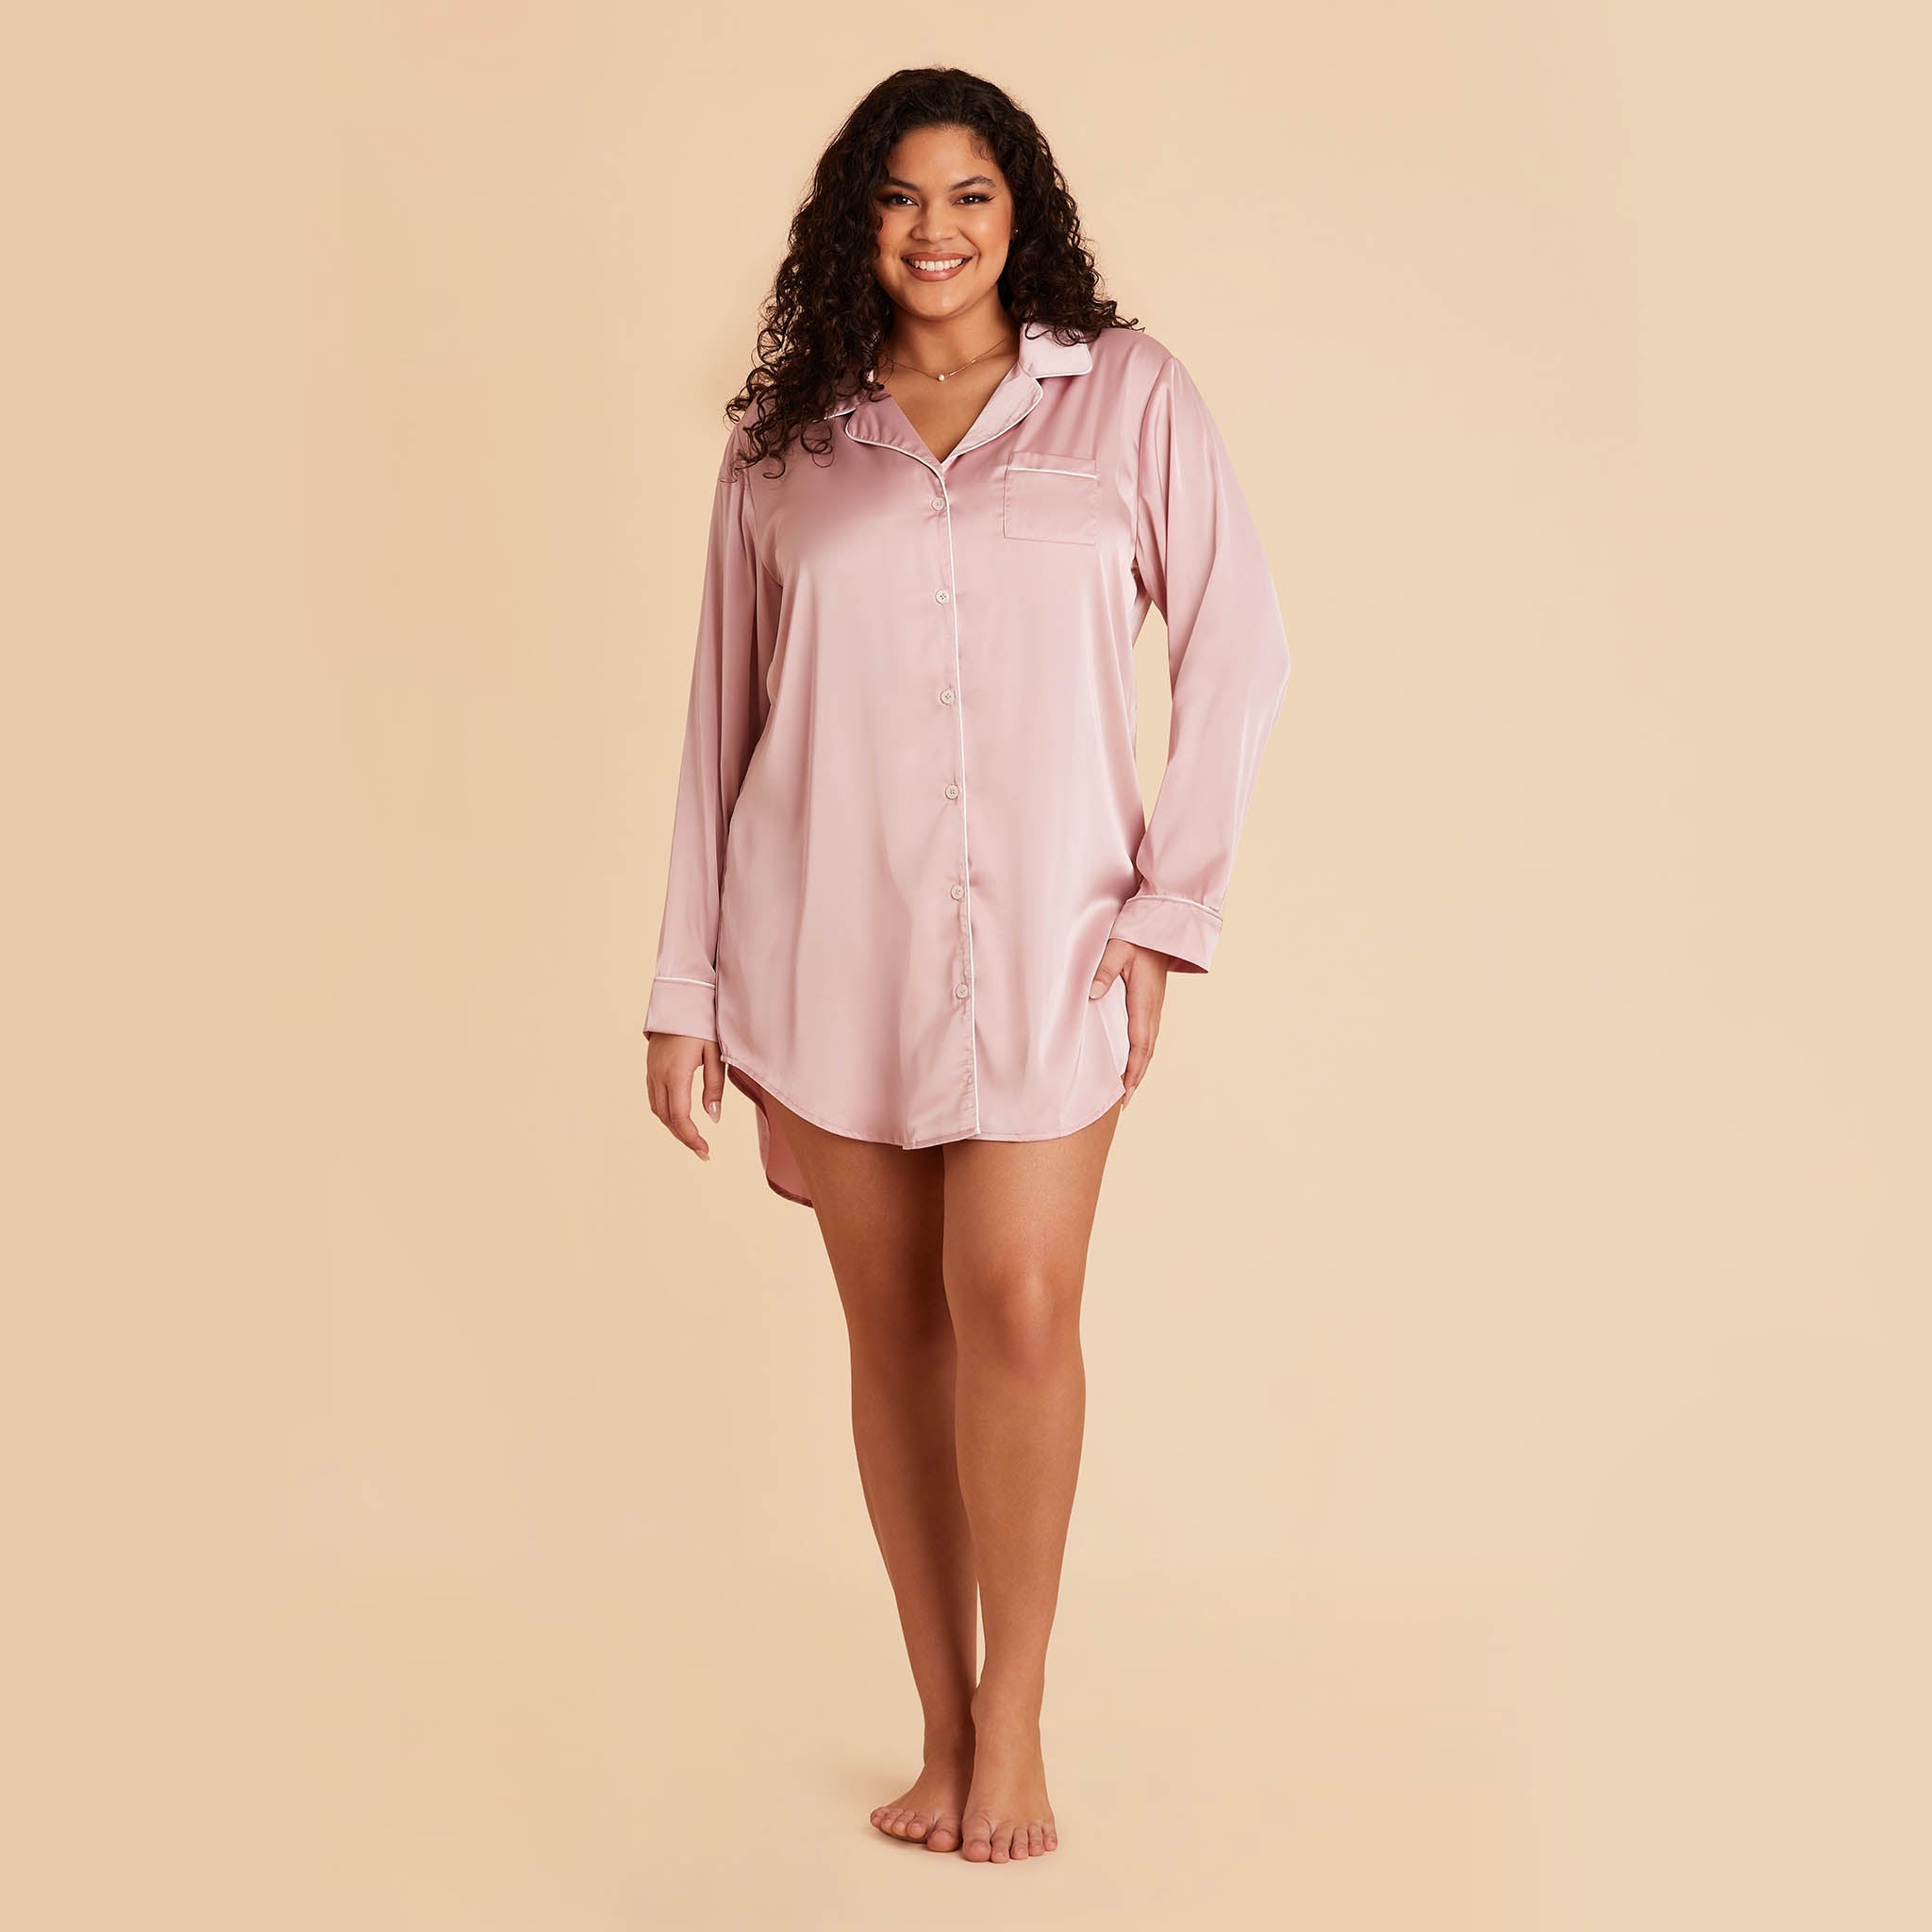 Sleepshirts & Nightgowns, Plus Size Sleepwear